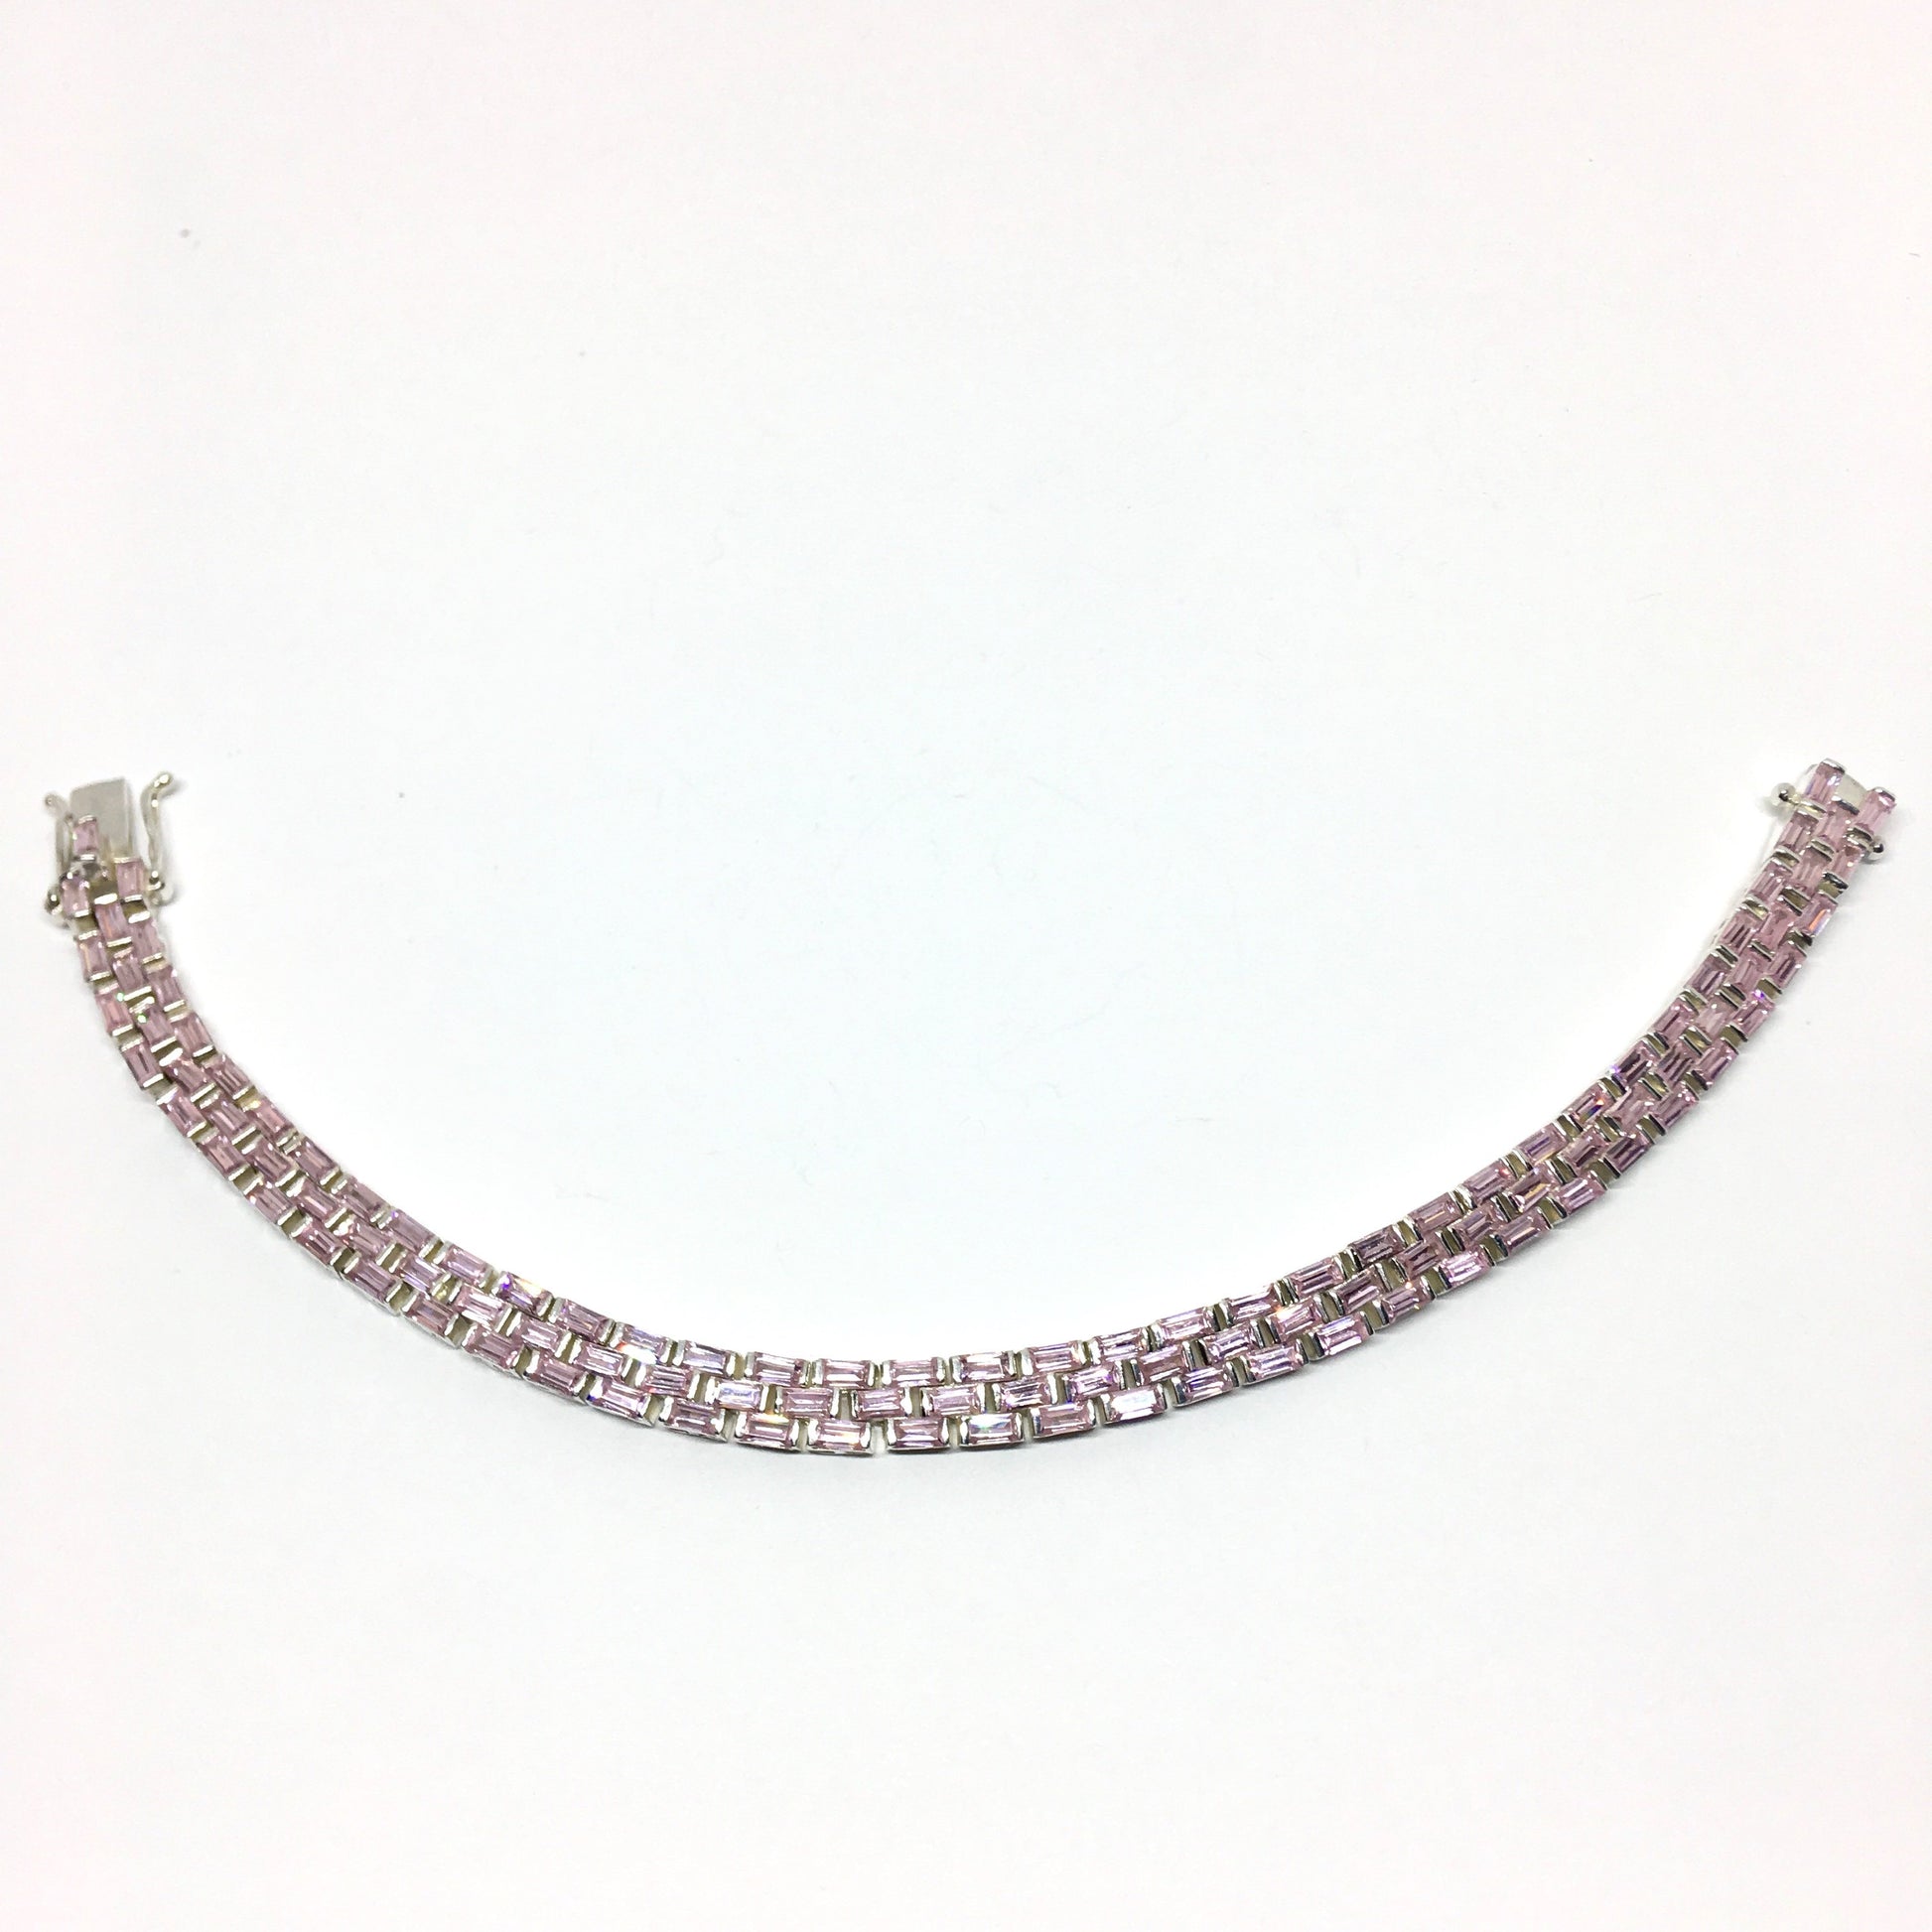 Bracelet - Sterling Silver Pink Tennis Bracelet - Women's Sparkling Cz Stone Bracelet - Statement Jewelry - Cocktail Bracelet